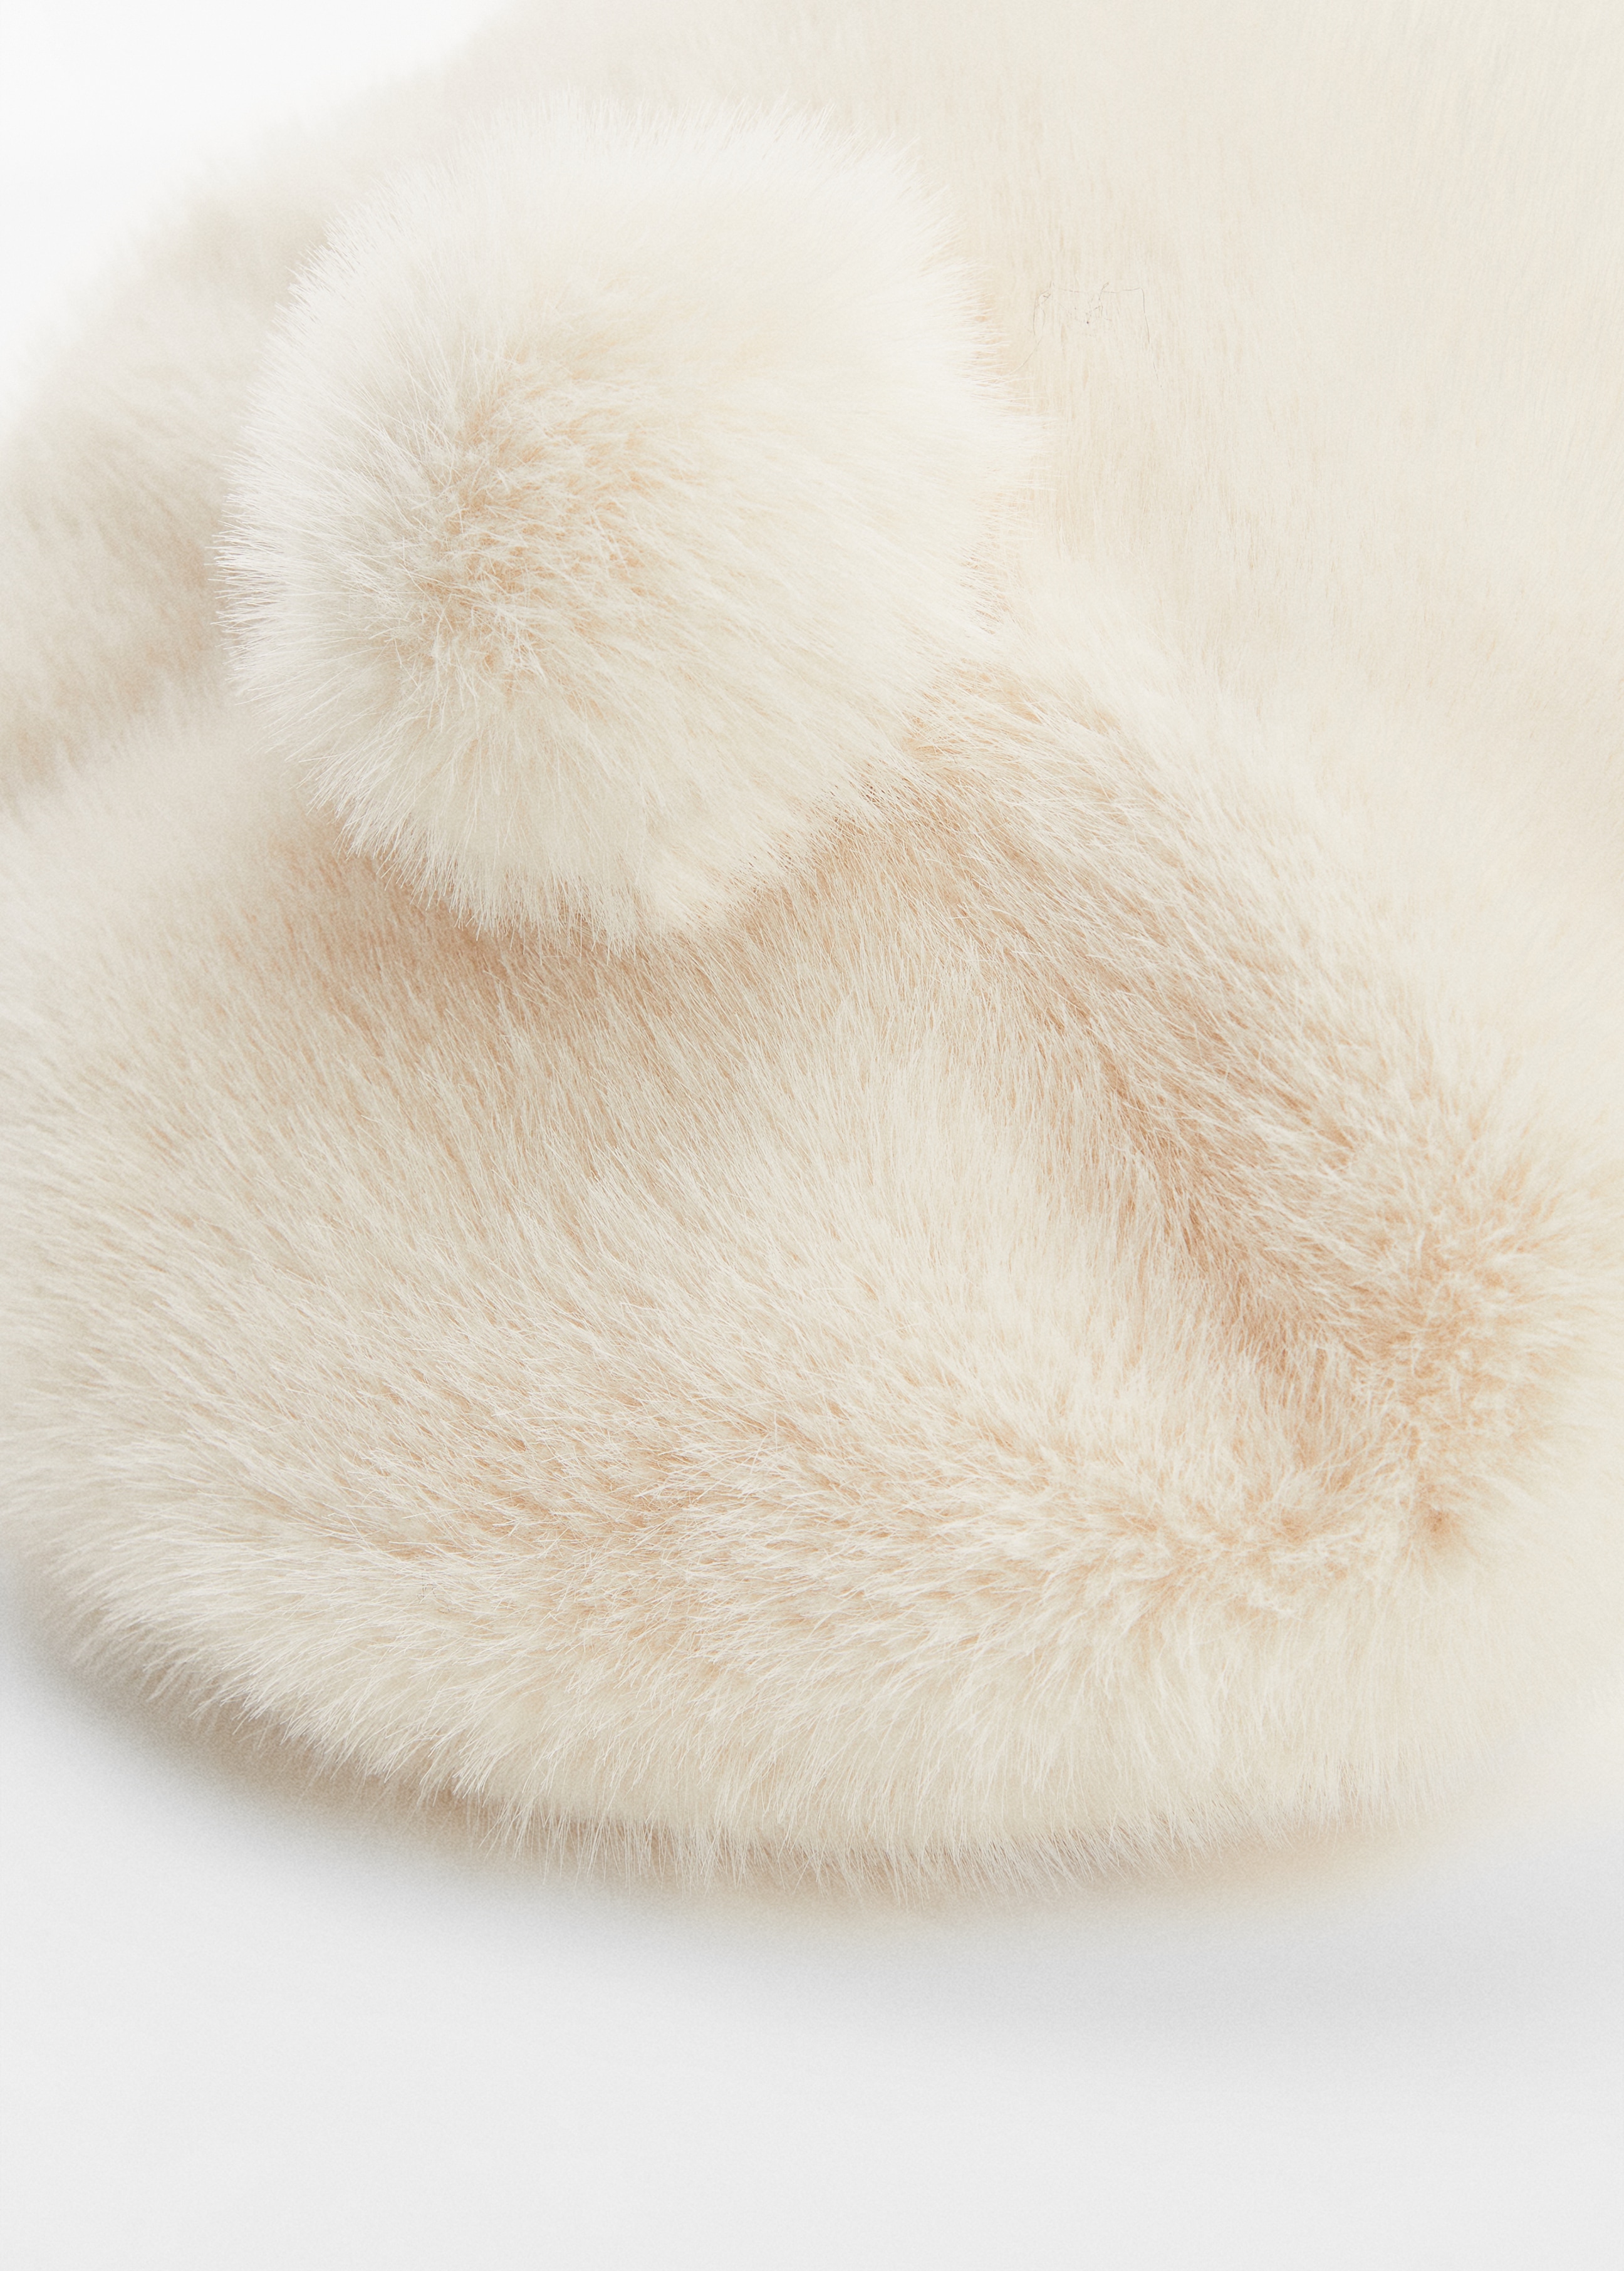 Fur-effect beret with pompom  - Medium plane